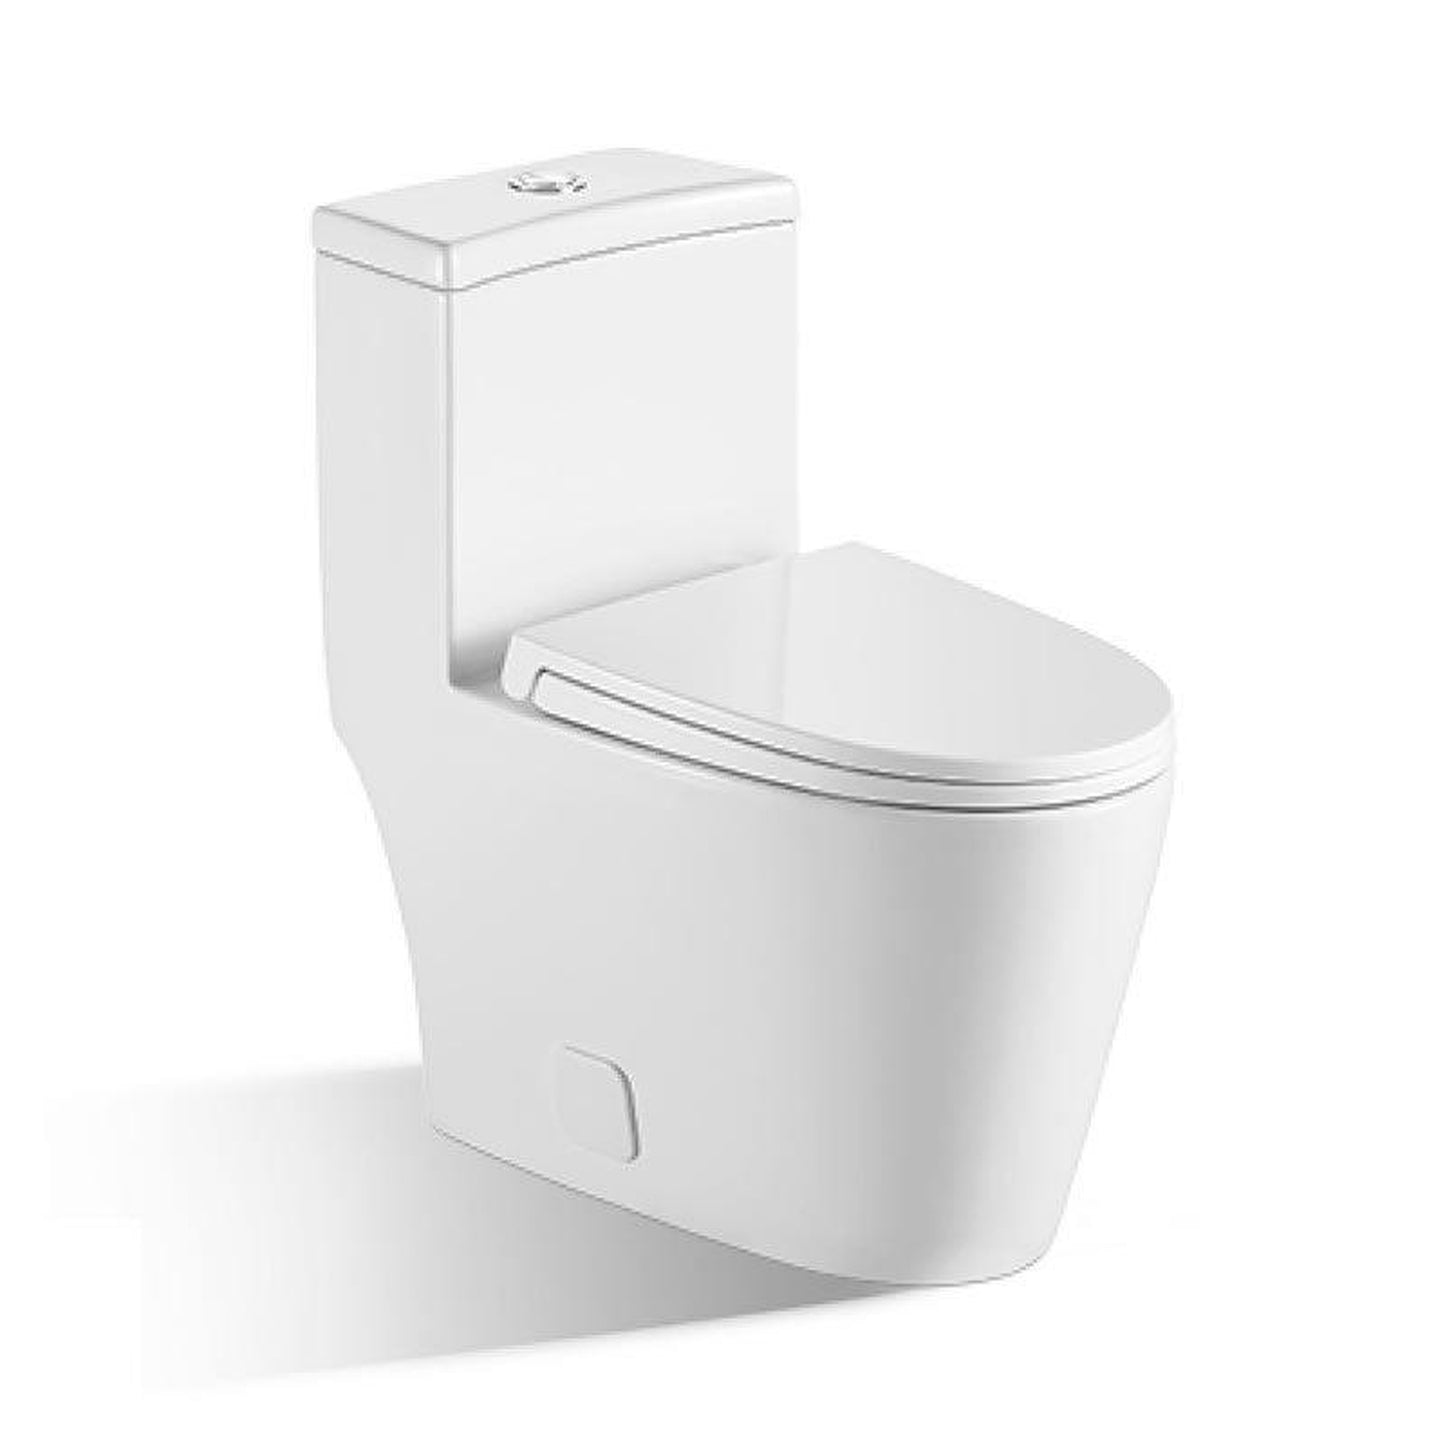 BNK BTO BL-032 Siphon Flushing Toilet